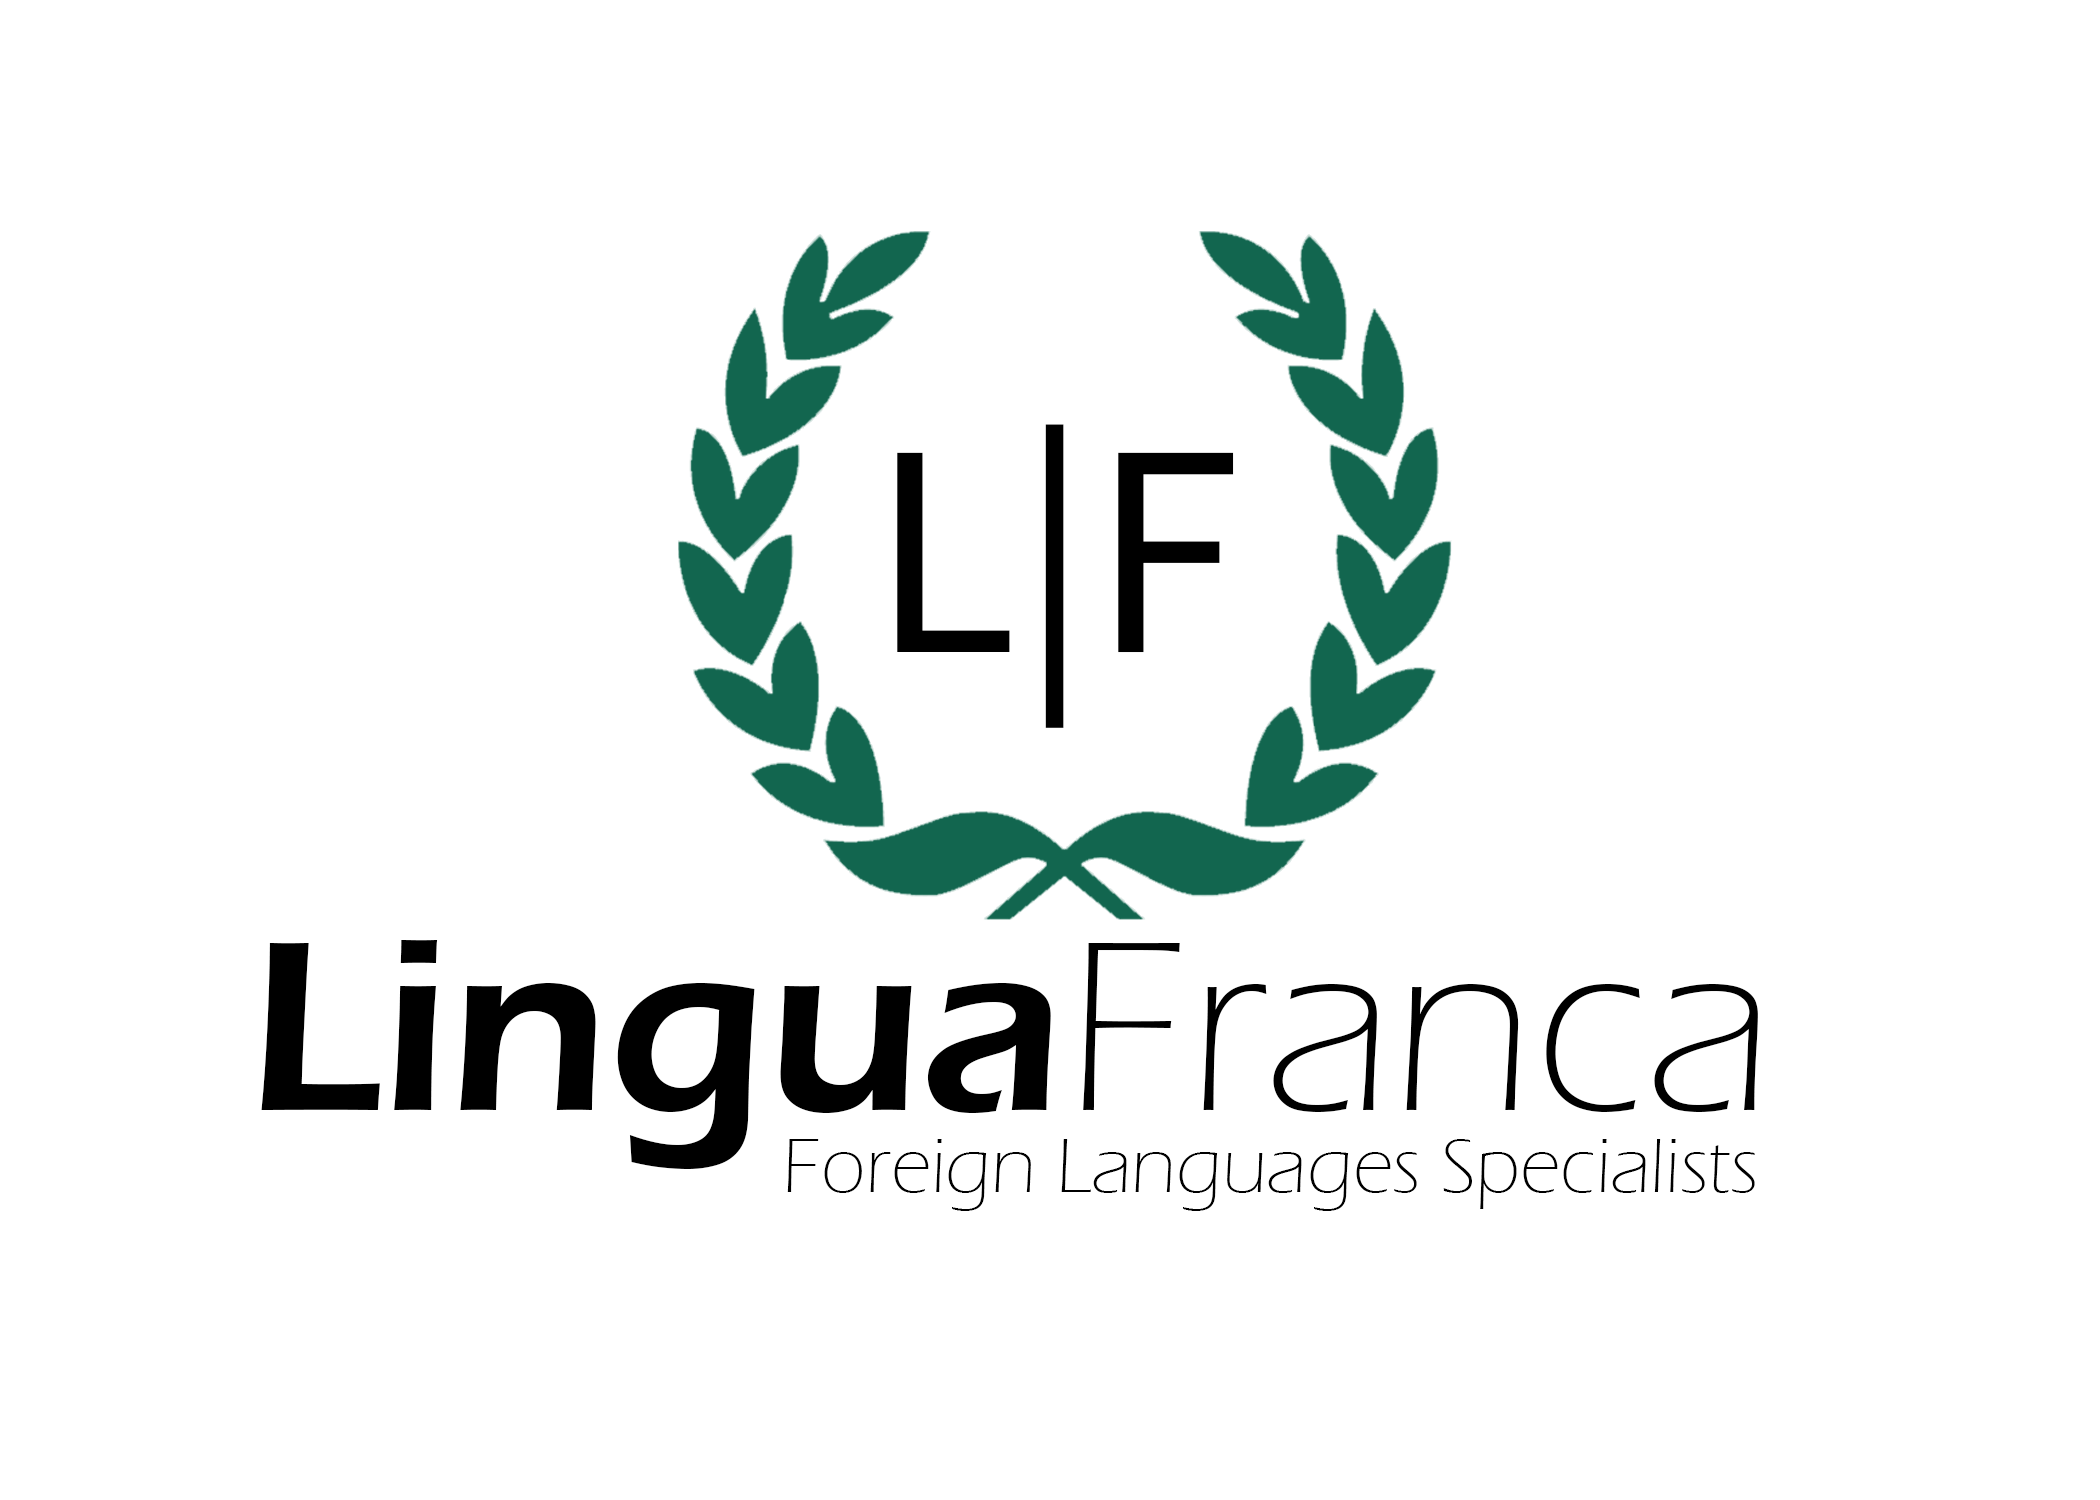 Lingua Franca Ltd, Foreign Languages Specialists